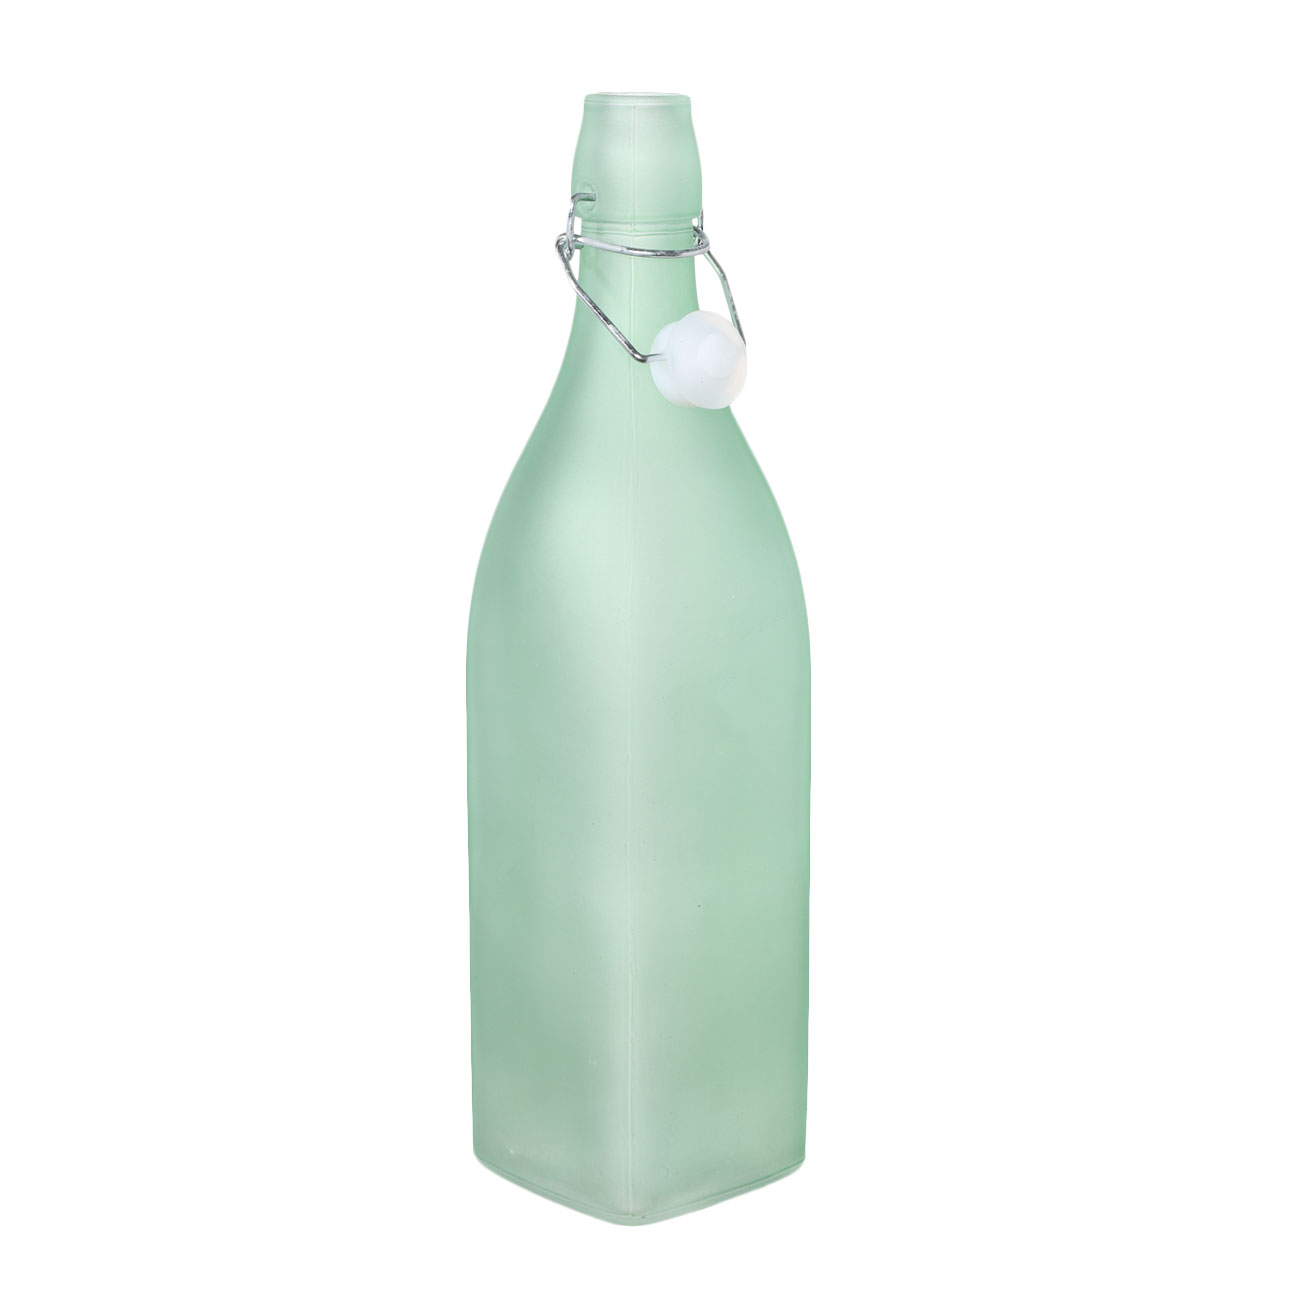 Бутылка для масла или уксуса, 500 мл, с клипсой, стекло/металл, зеленая, Light kitchen